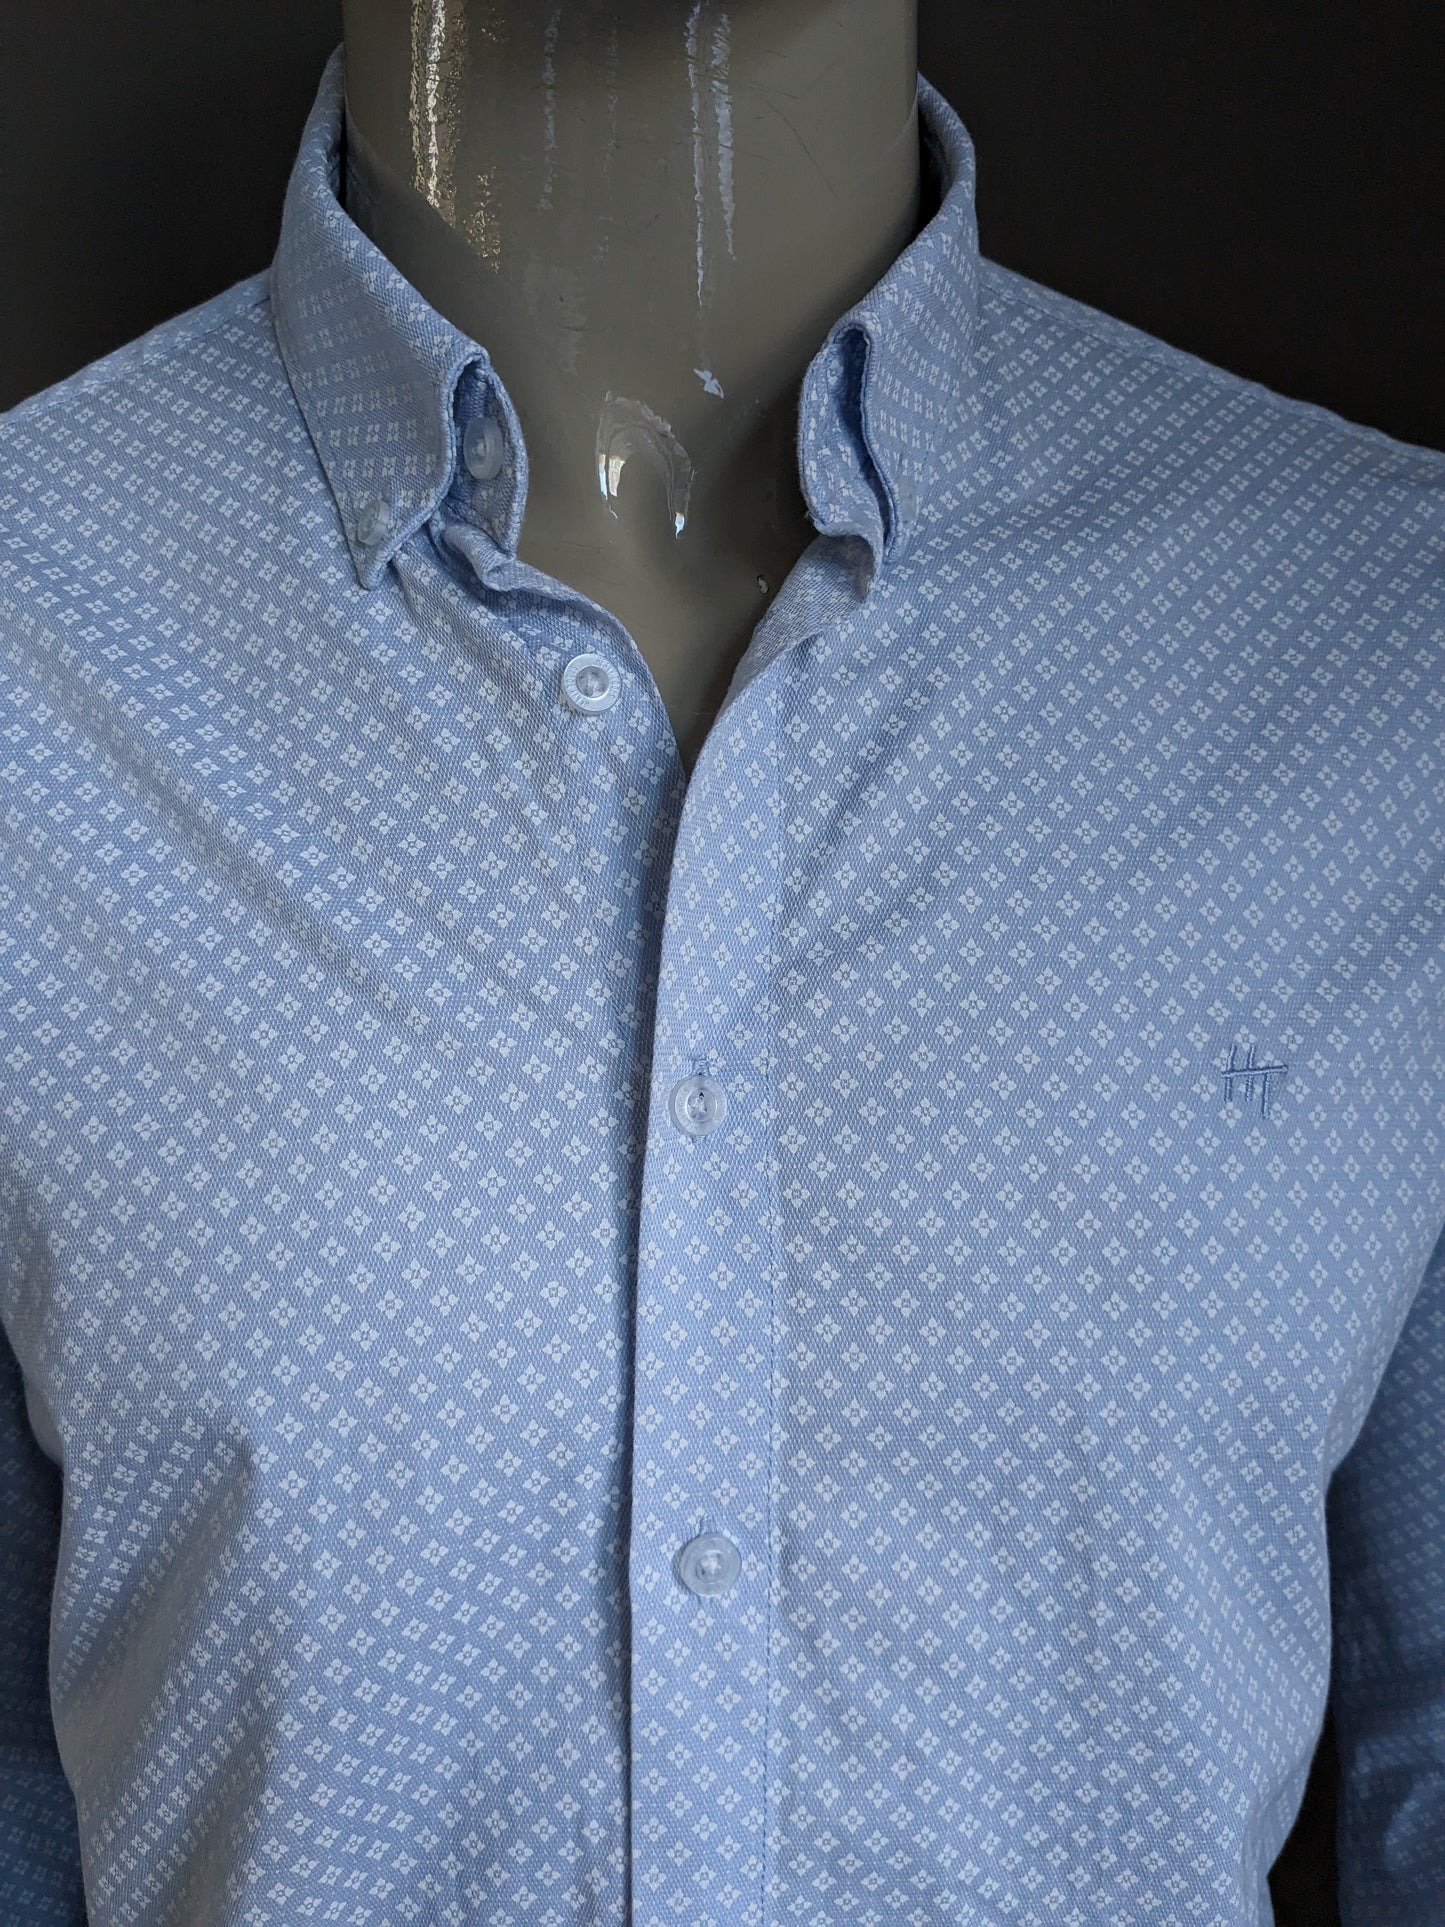 Heavy tools shirt. Blue white print. Size XL. Slim fit.